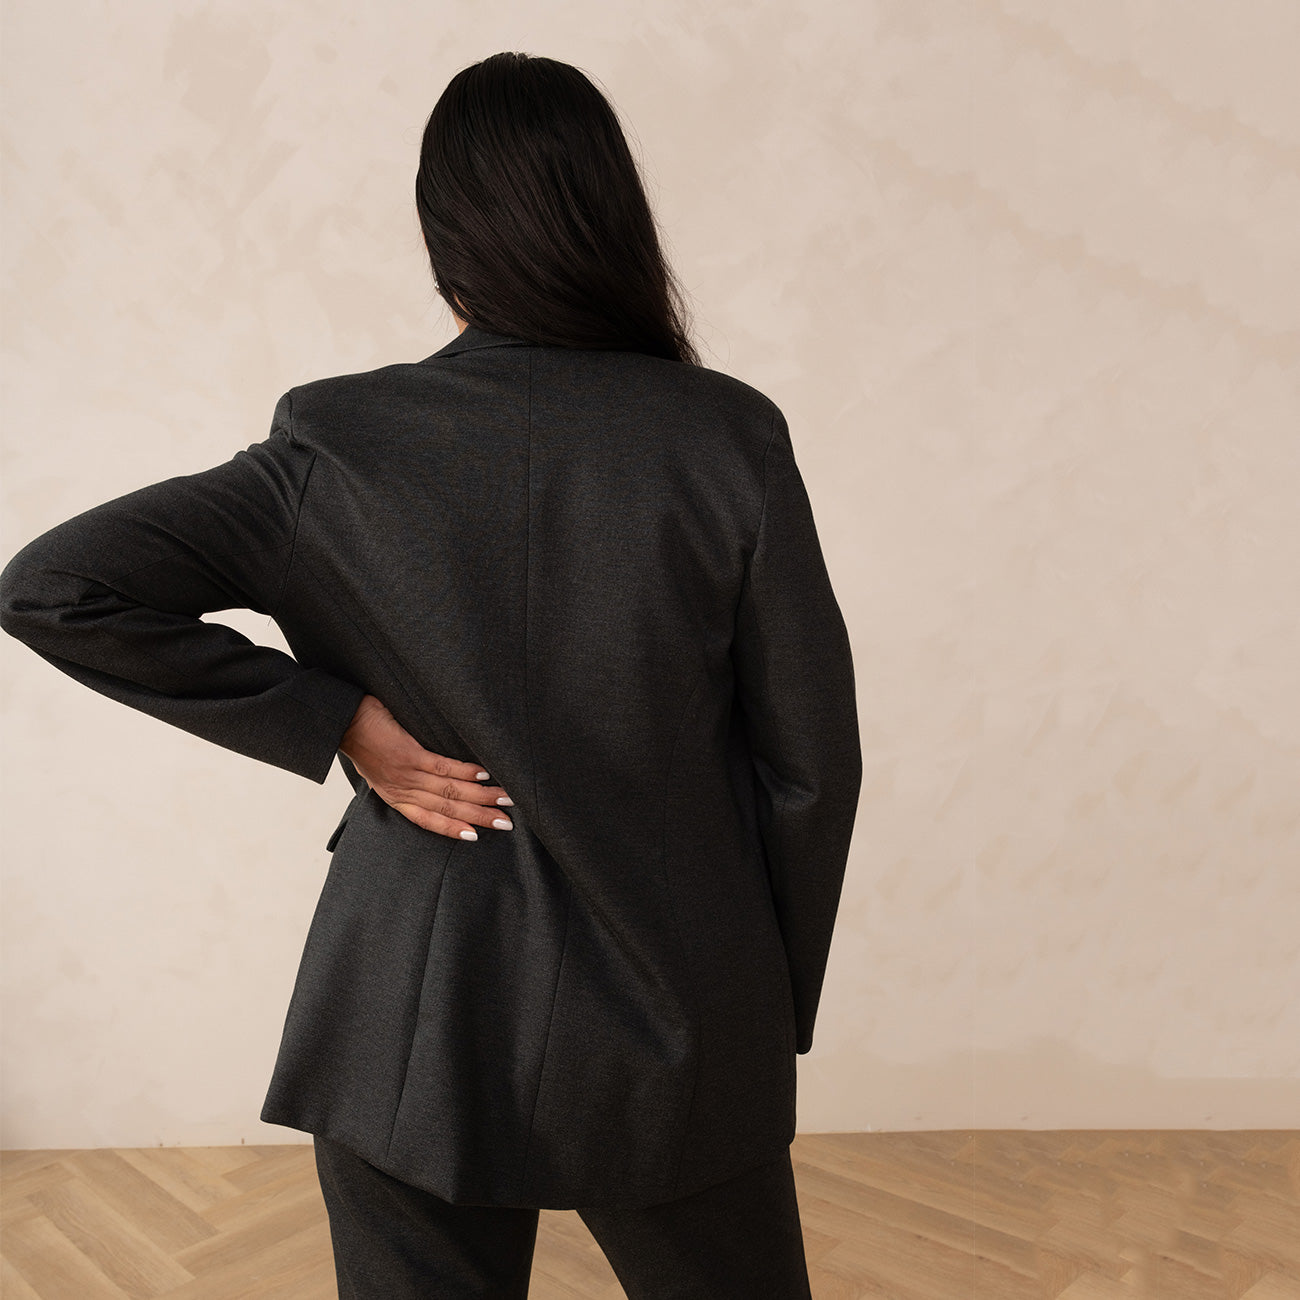 back of a woman wearing a grey blazer